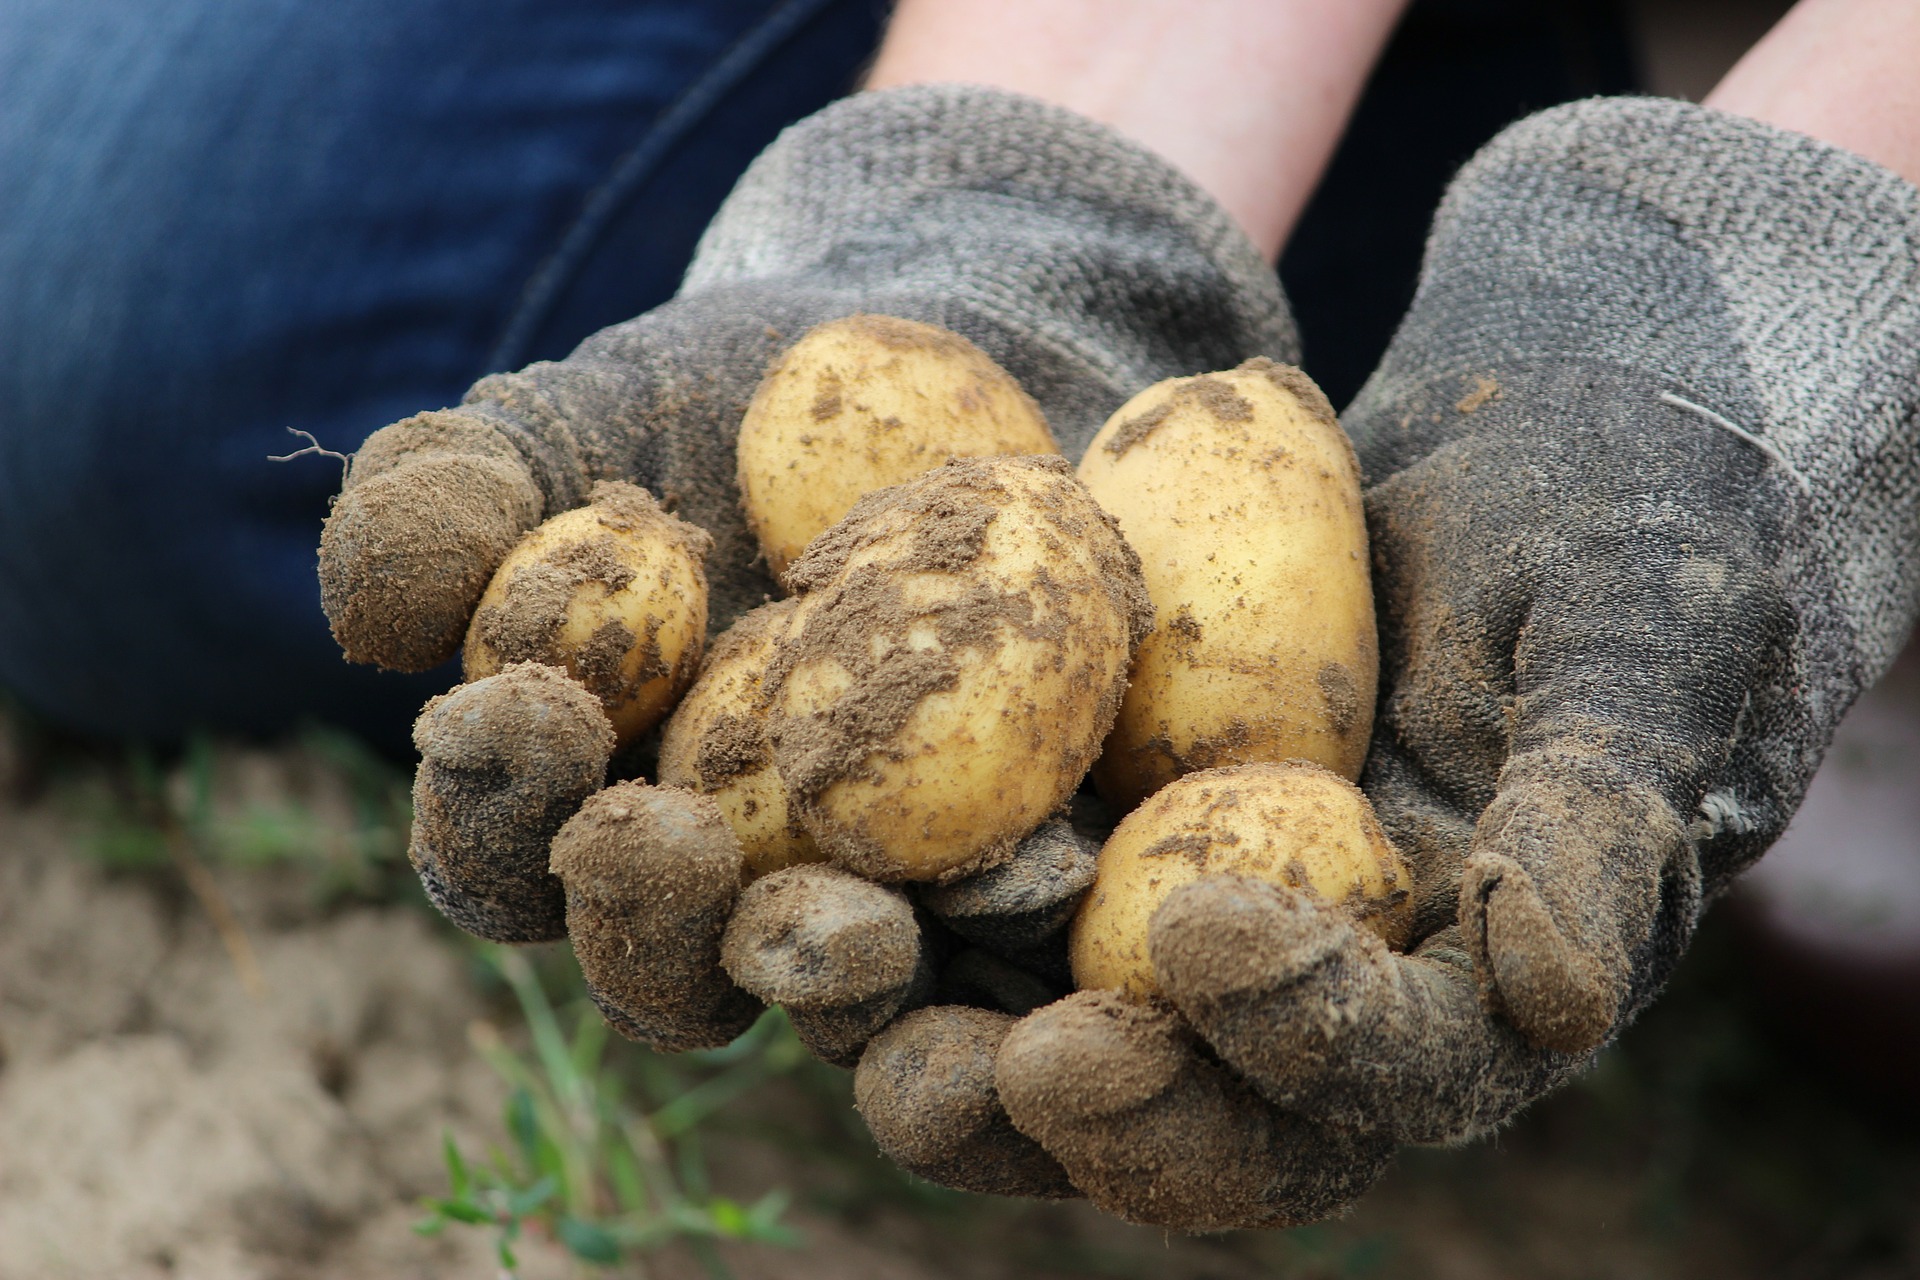 Two gloved hands holding six freshly dug yellow potatoes. 